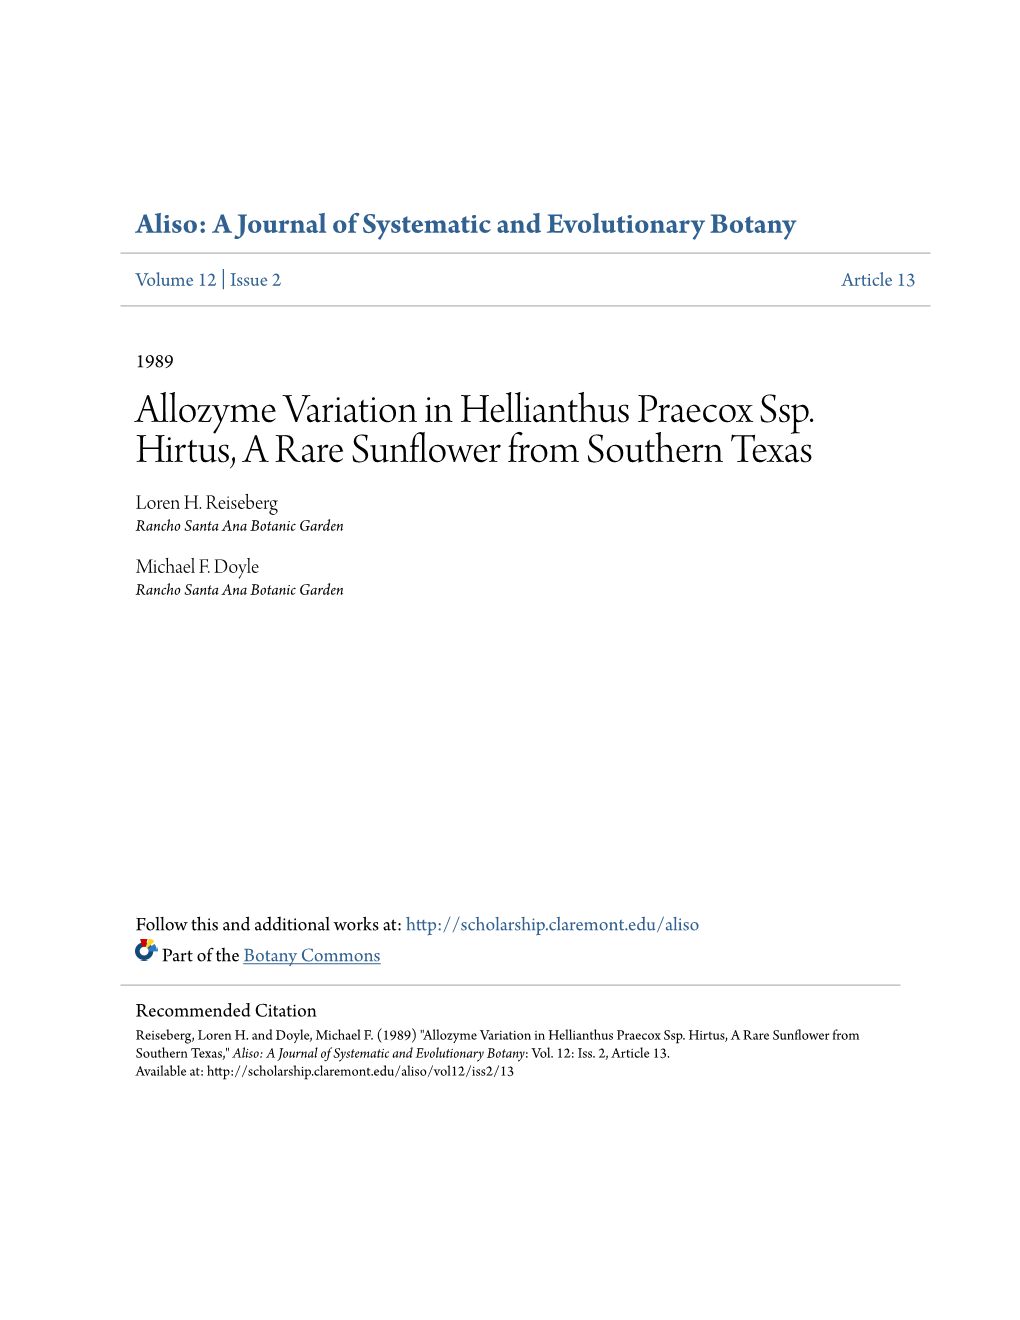 Allozyme Variation in Hellianthus Praecox Ssp. Hirtus, a Rare Sunflower from Southern Texas Loren H